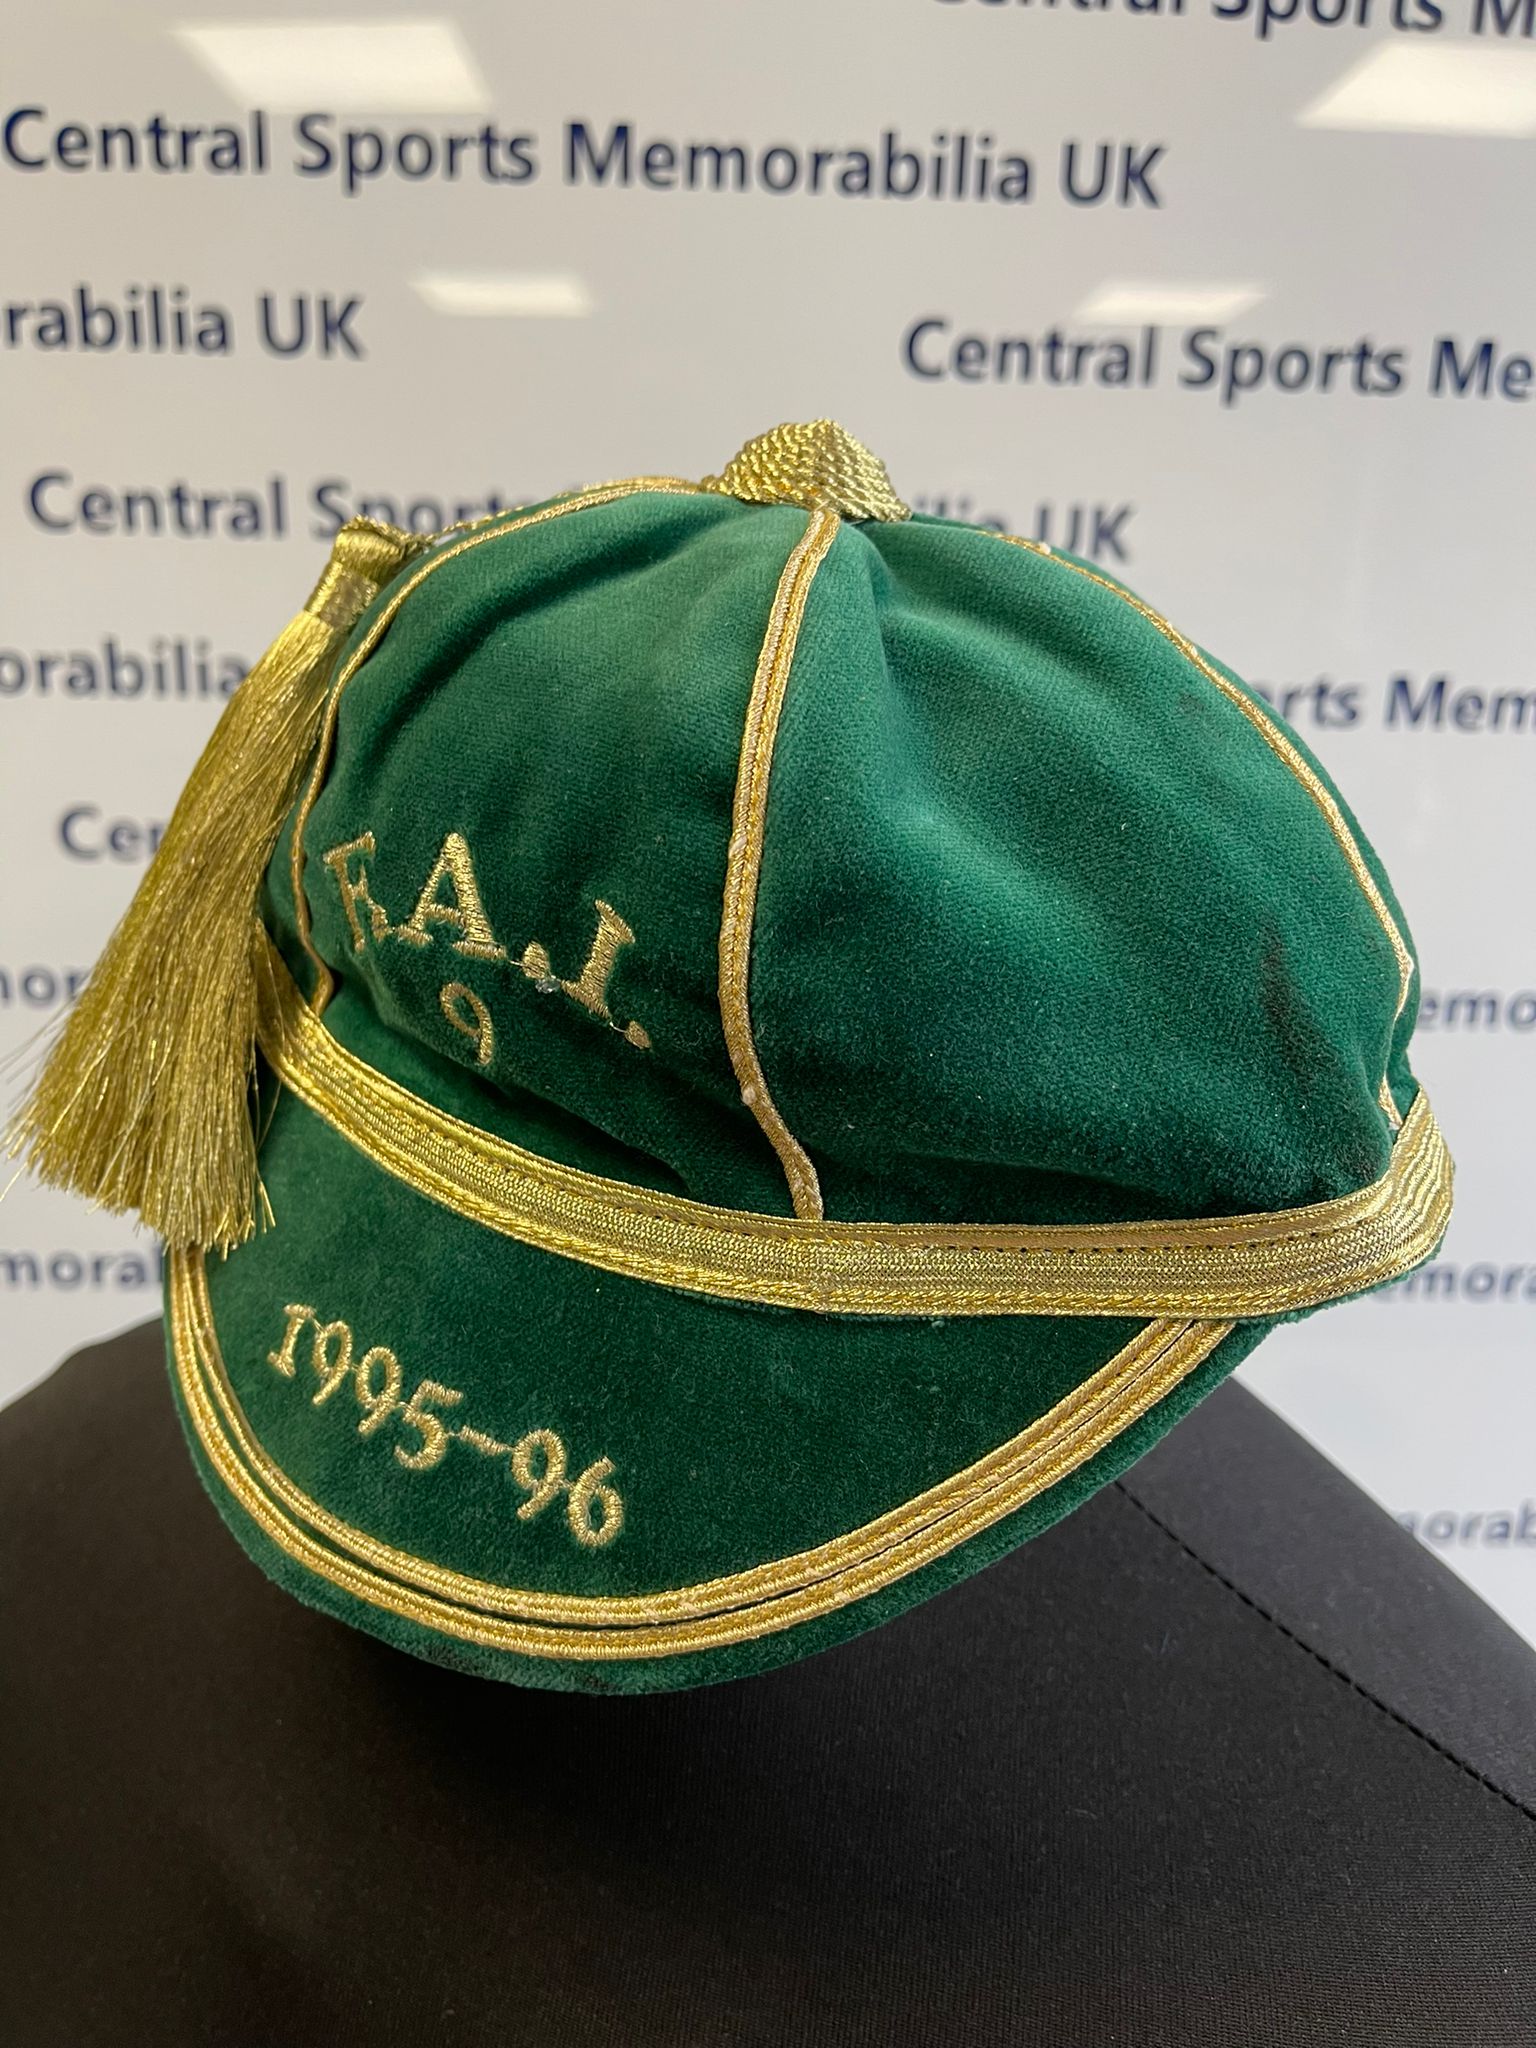 Jeff Kenna Full Ireland International Cap Awarded 1995-1996